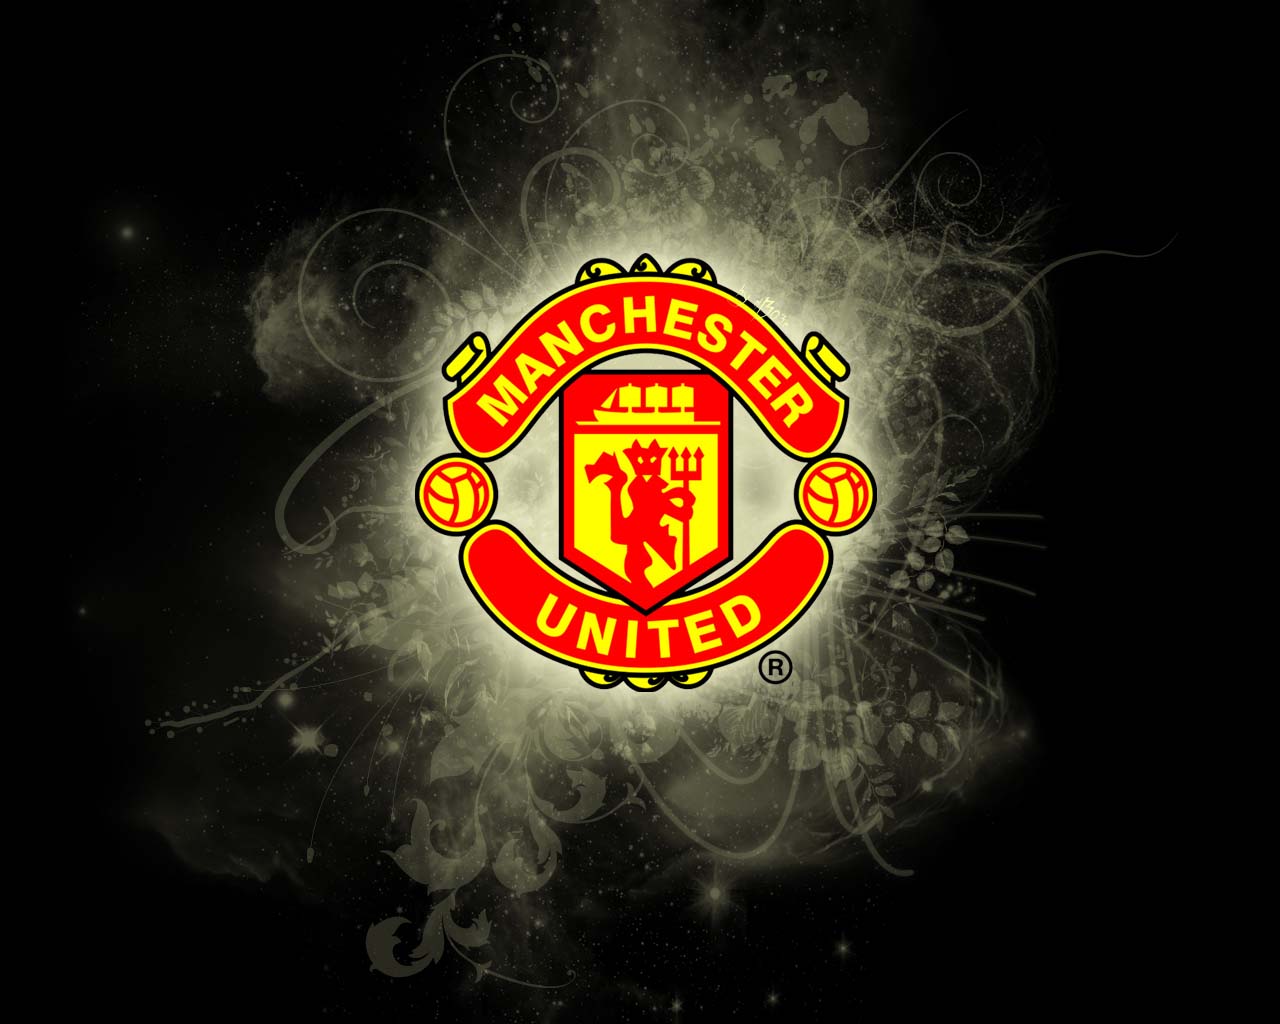 Sum Manchester United Wallpaper